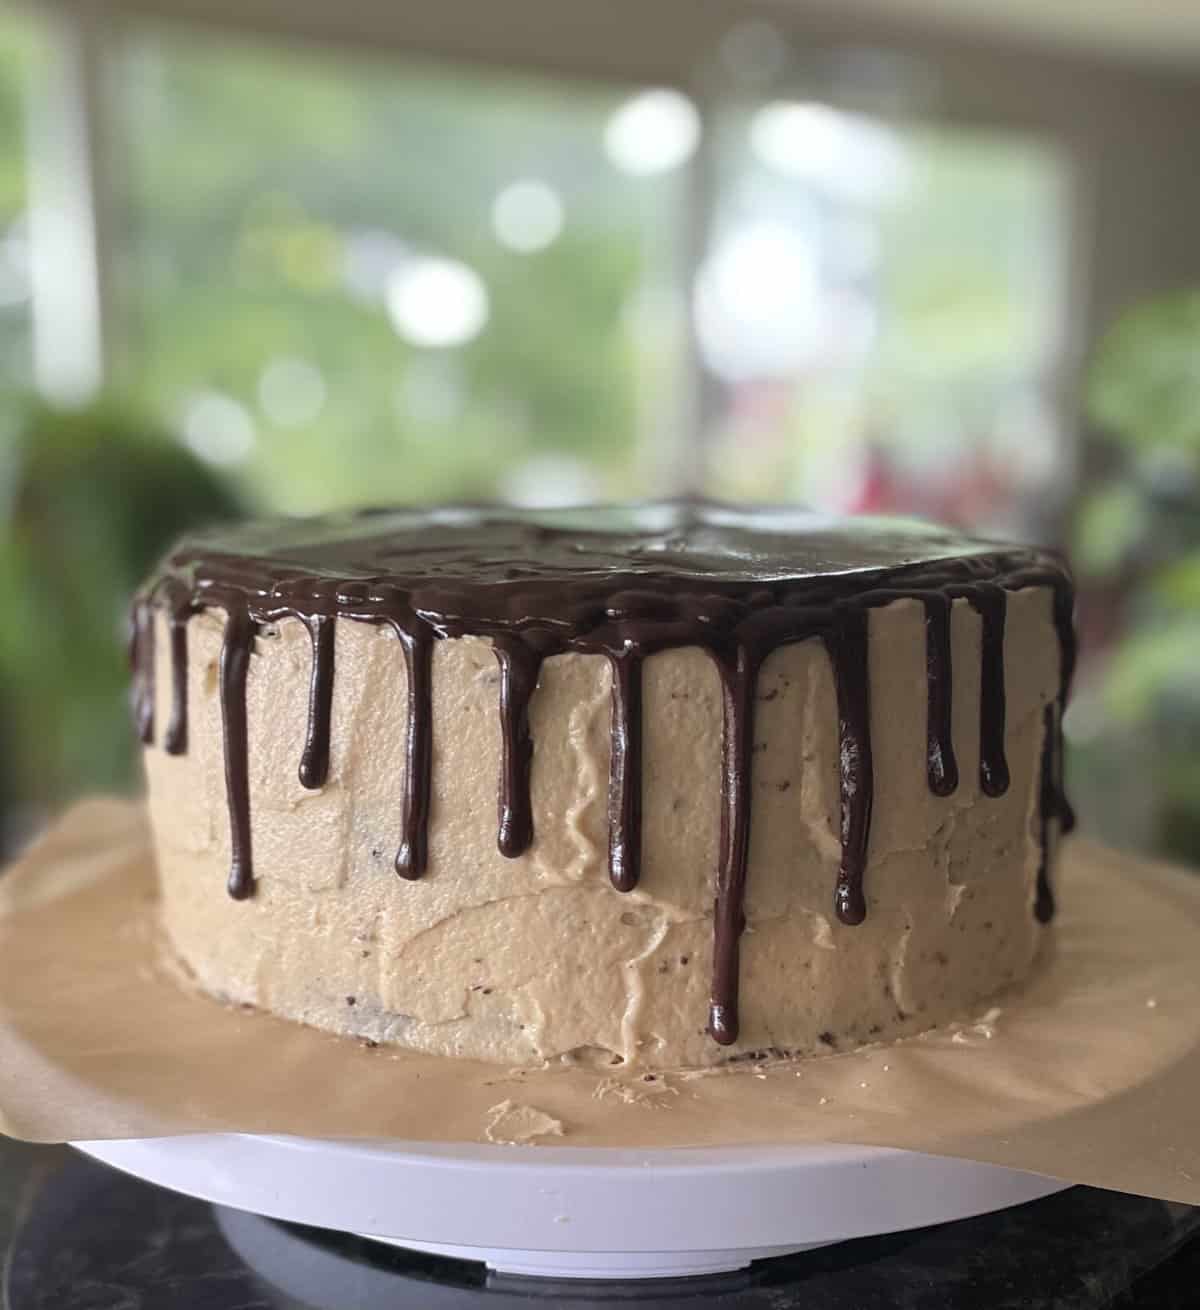 a peanut butter chocolate ganache drip cake on a cake stand